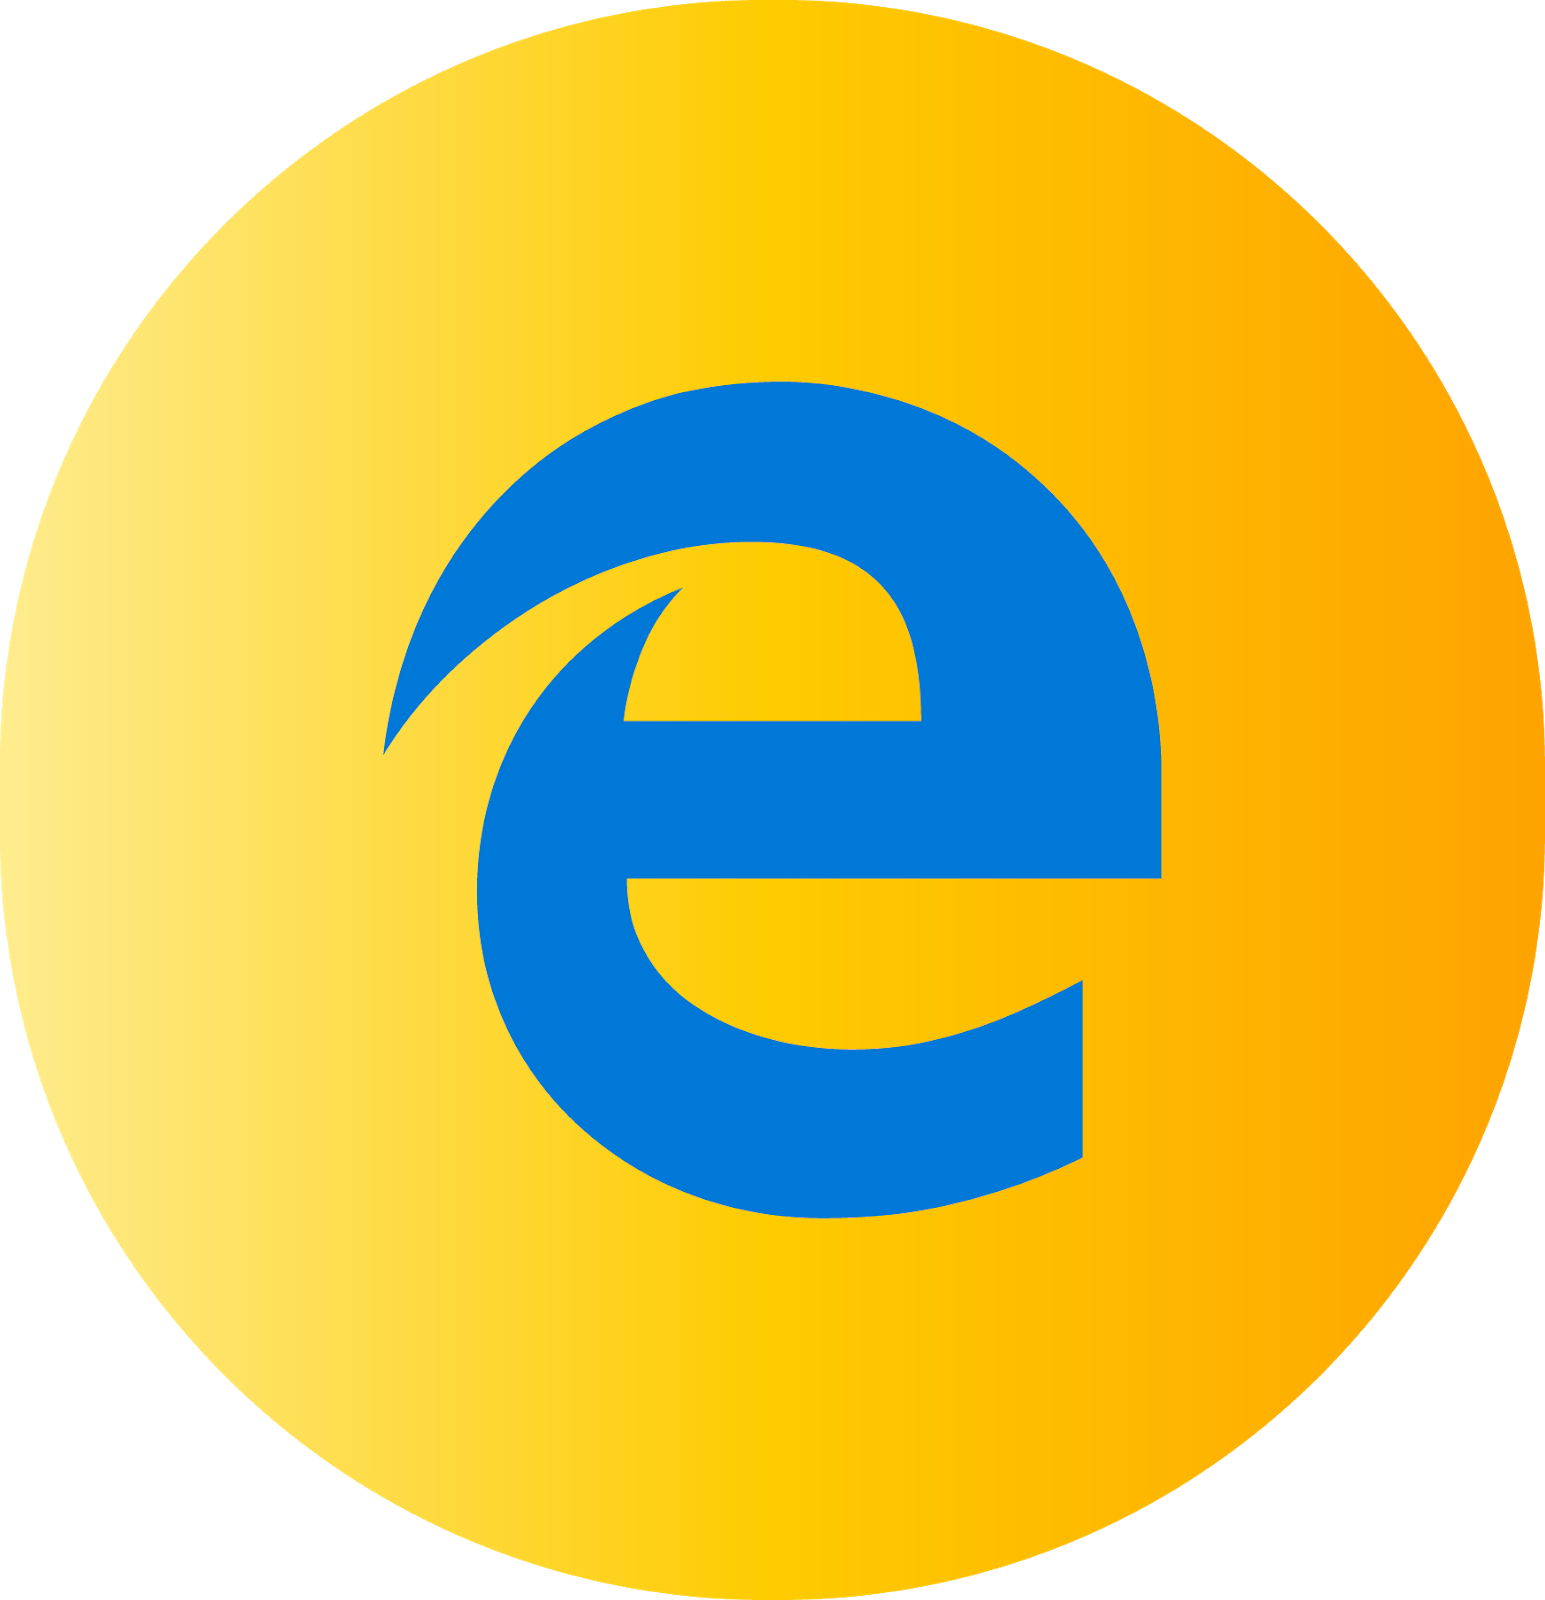 Microsoft Edge Icon at Vectorified.com | Collection of Microsoft Edge ...